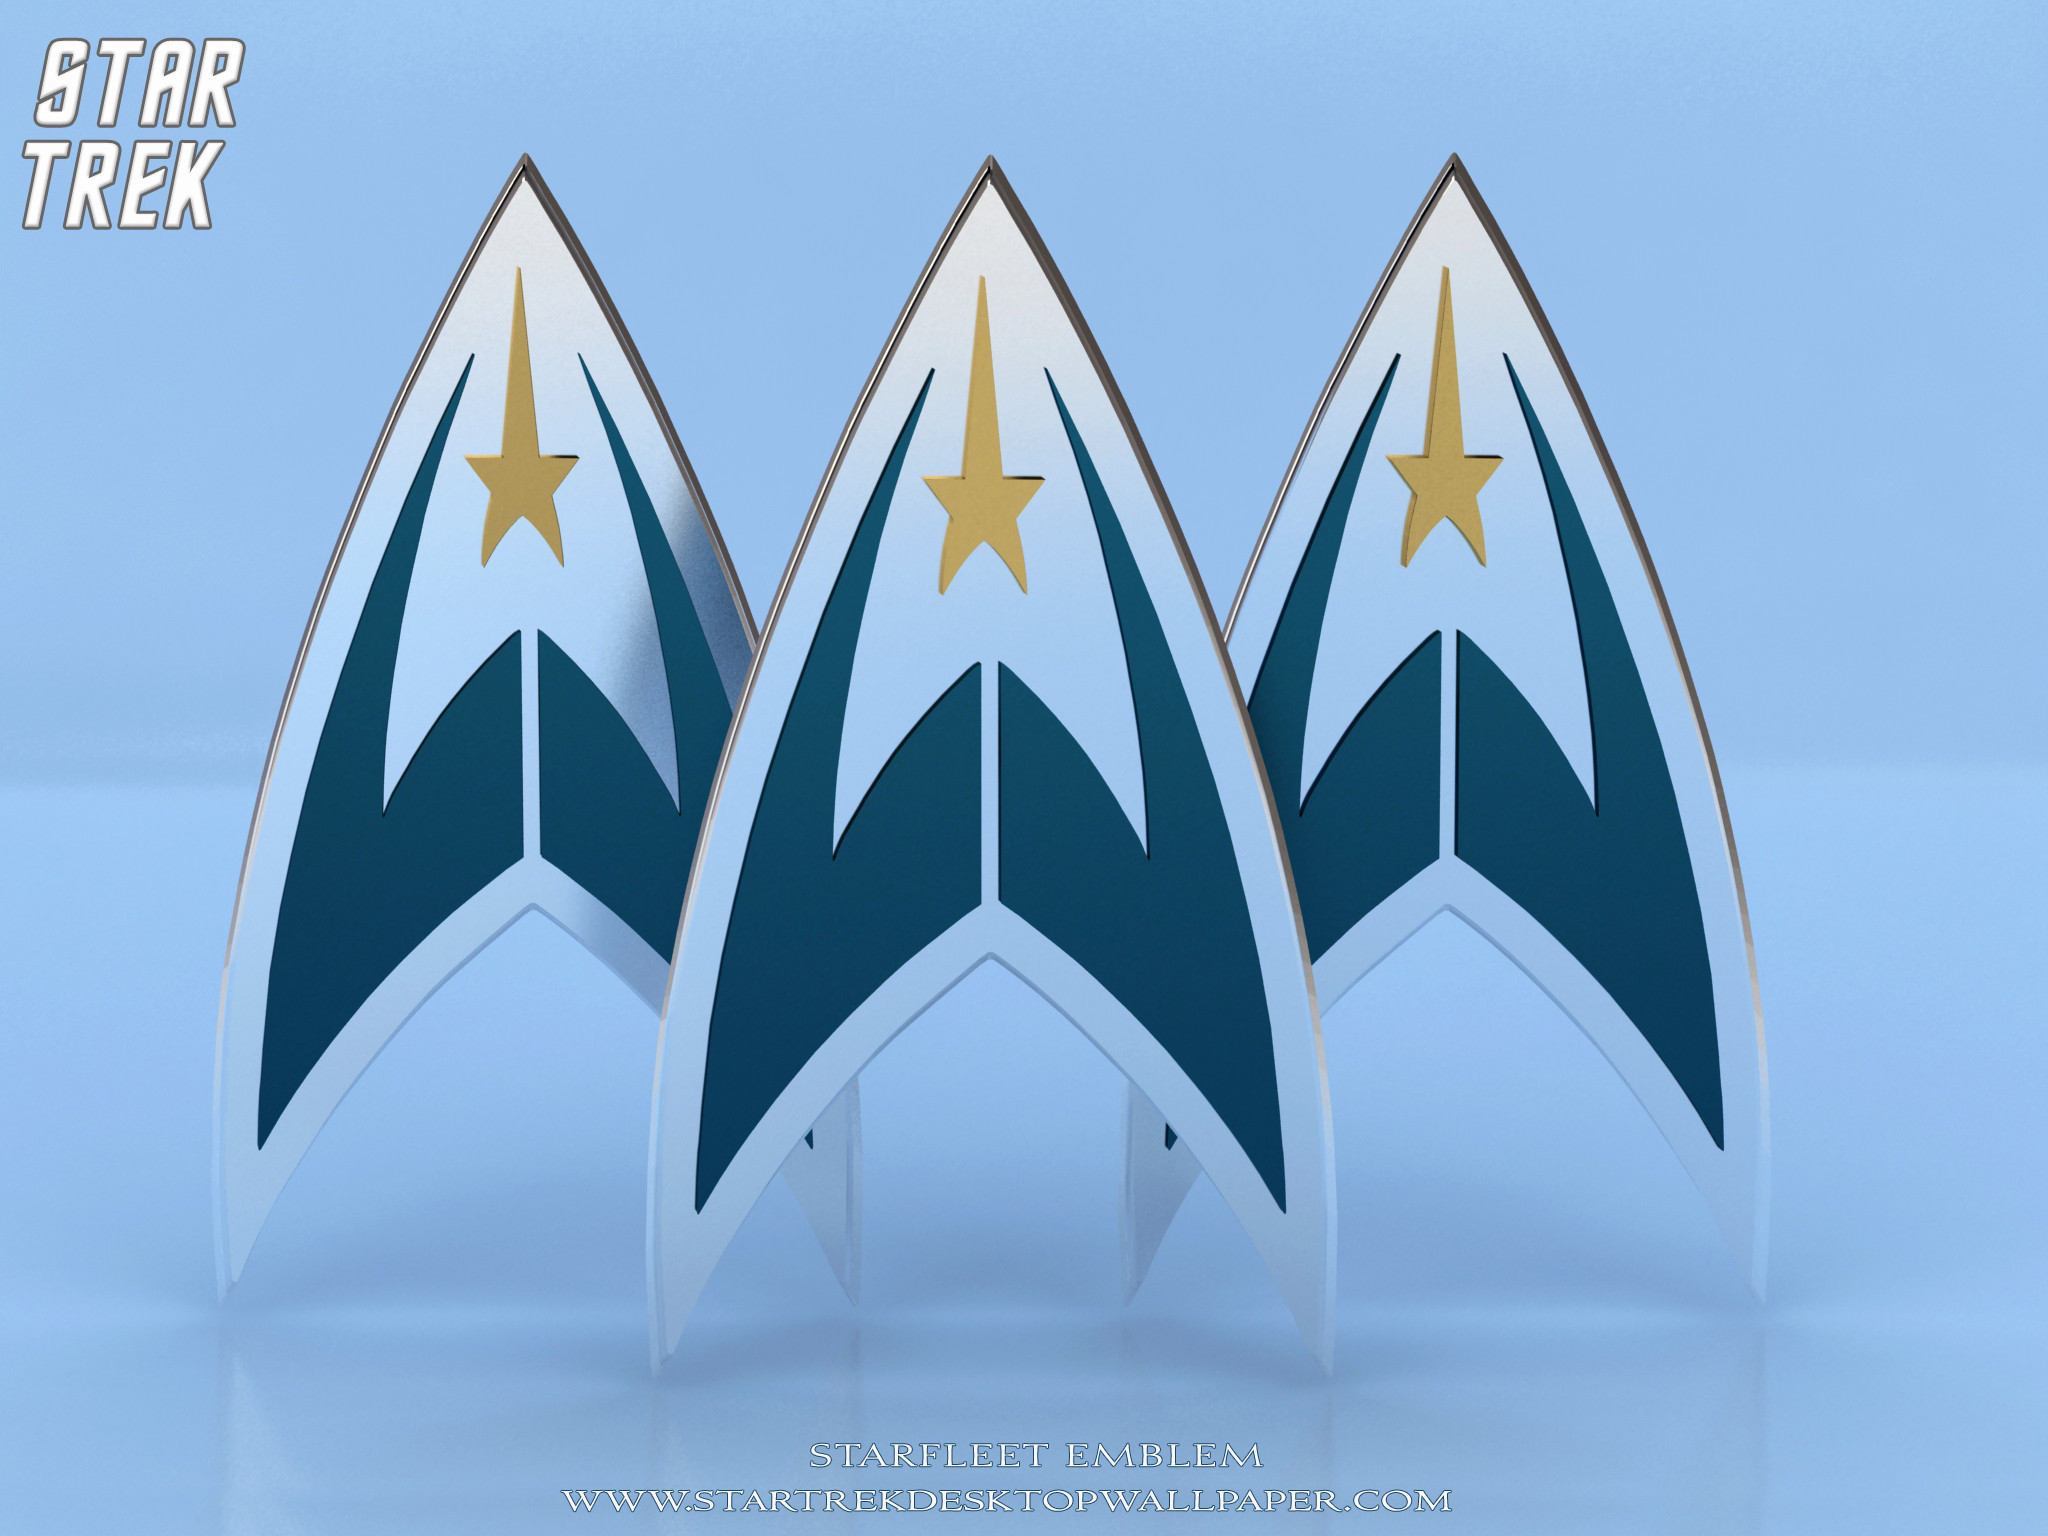 2048x1536 Star Trek Starfleet Emblem. Free Star Trek computer desktop wallpaper,  images, pictures download